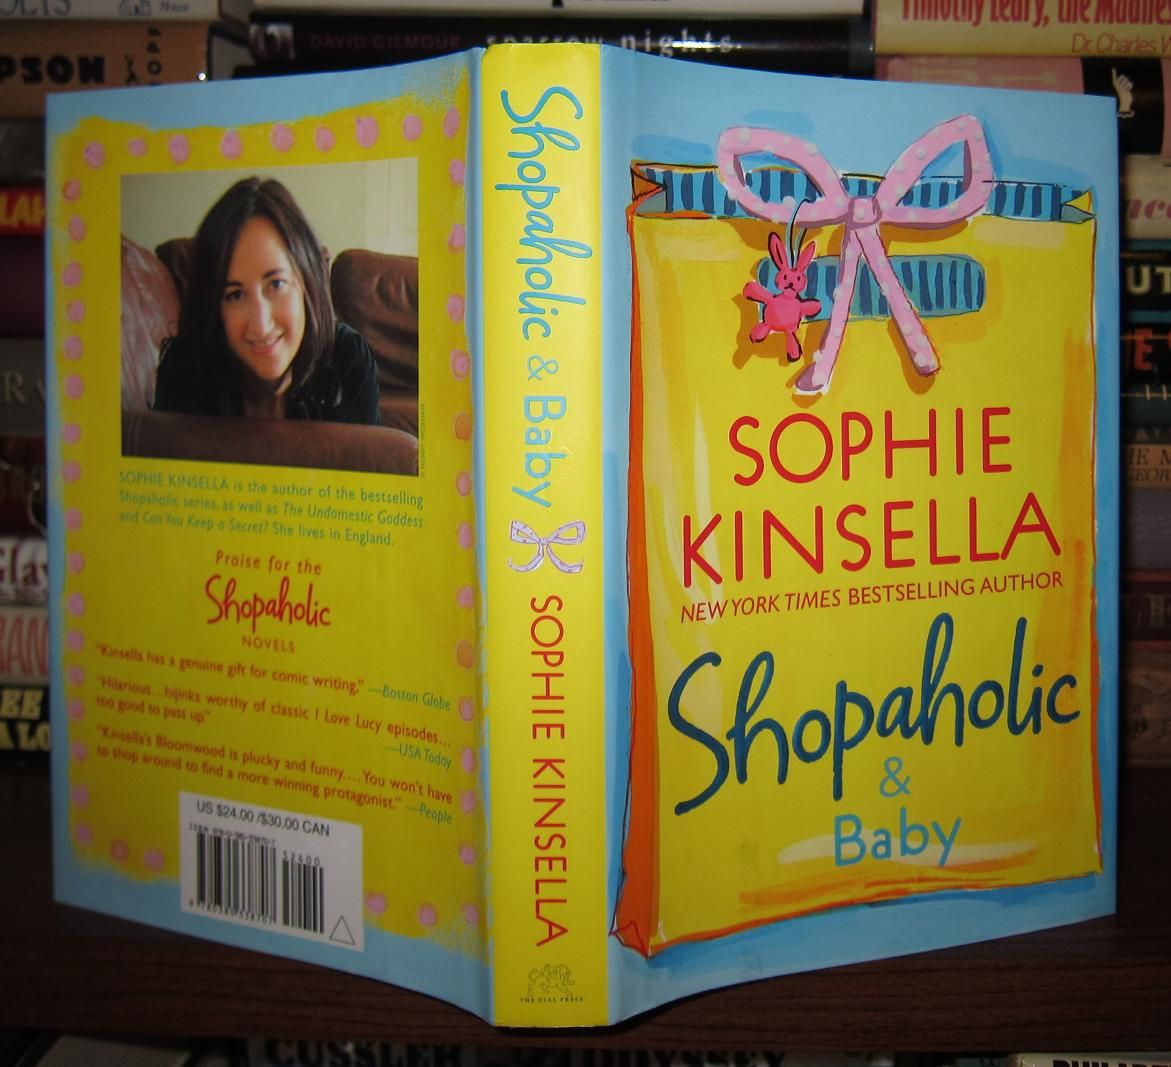 KINSELLA, SOPHIE - Shopaholic & Baby